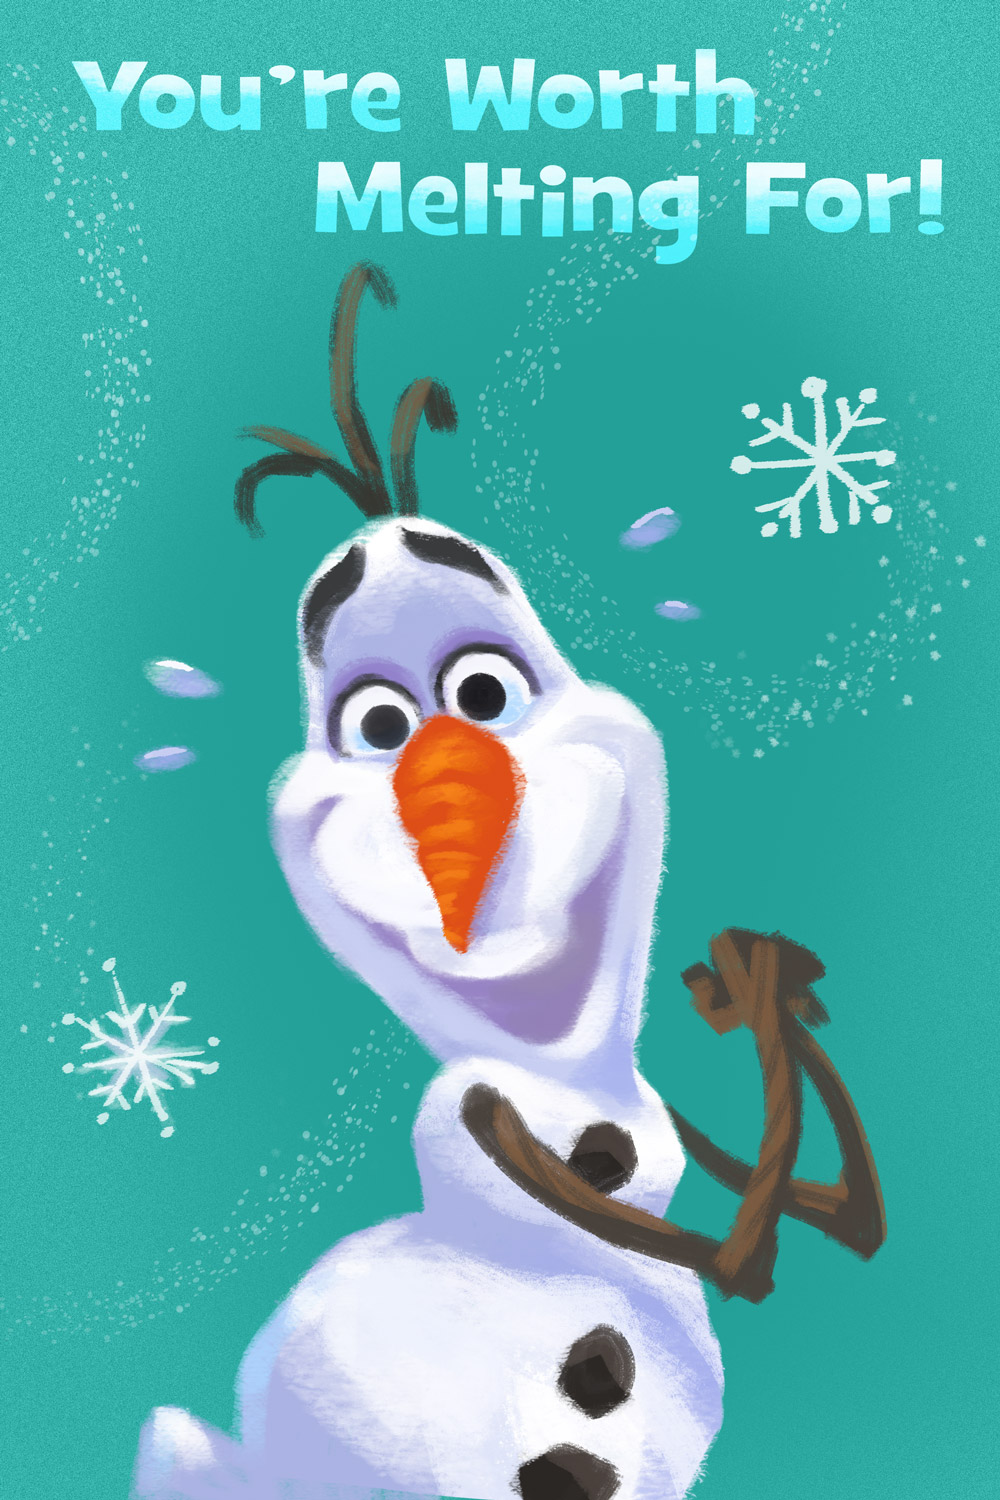 You're worth melting for Olaf Disney Valentine